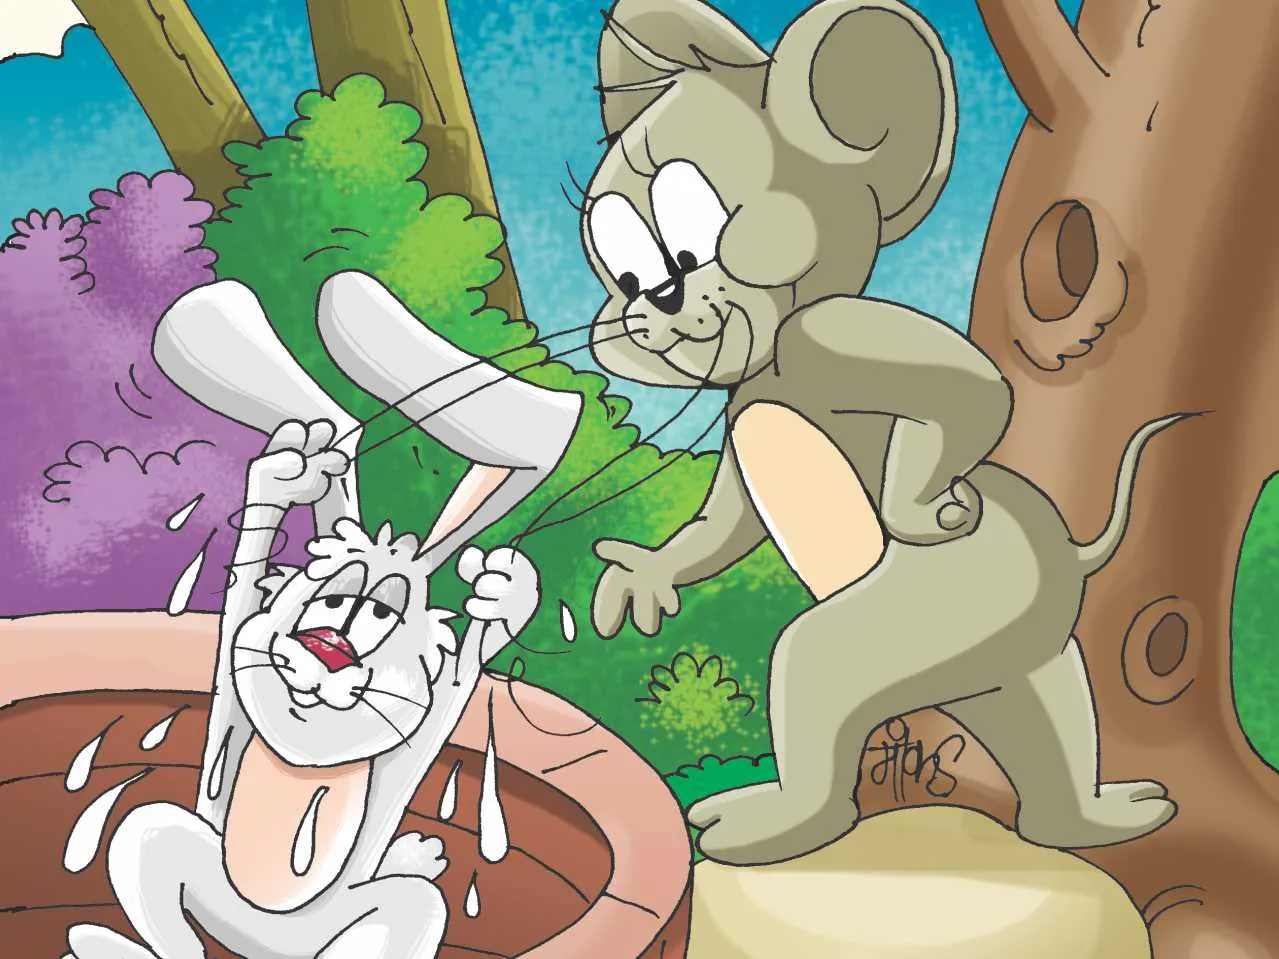 Mouse helping Rabbit cartoon image